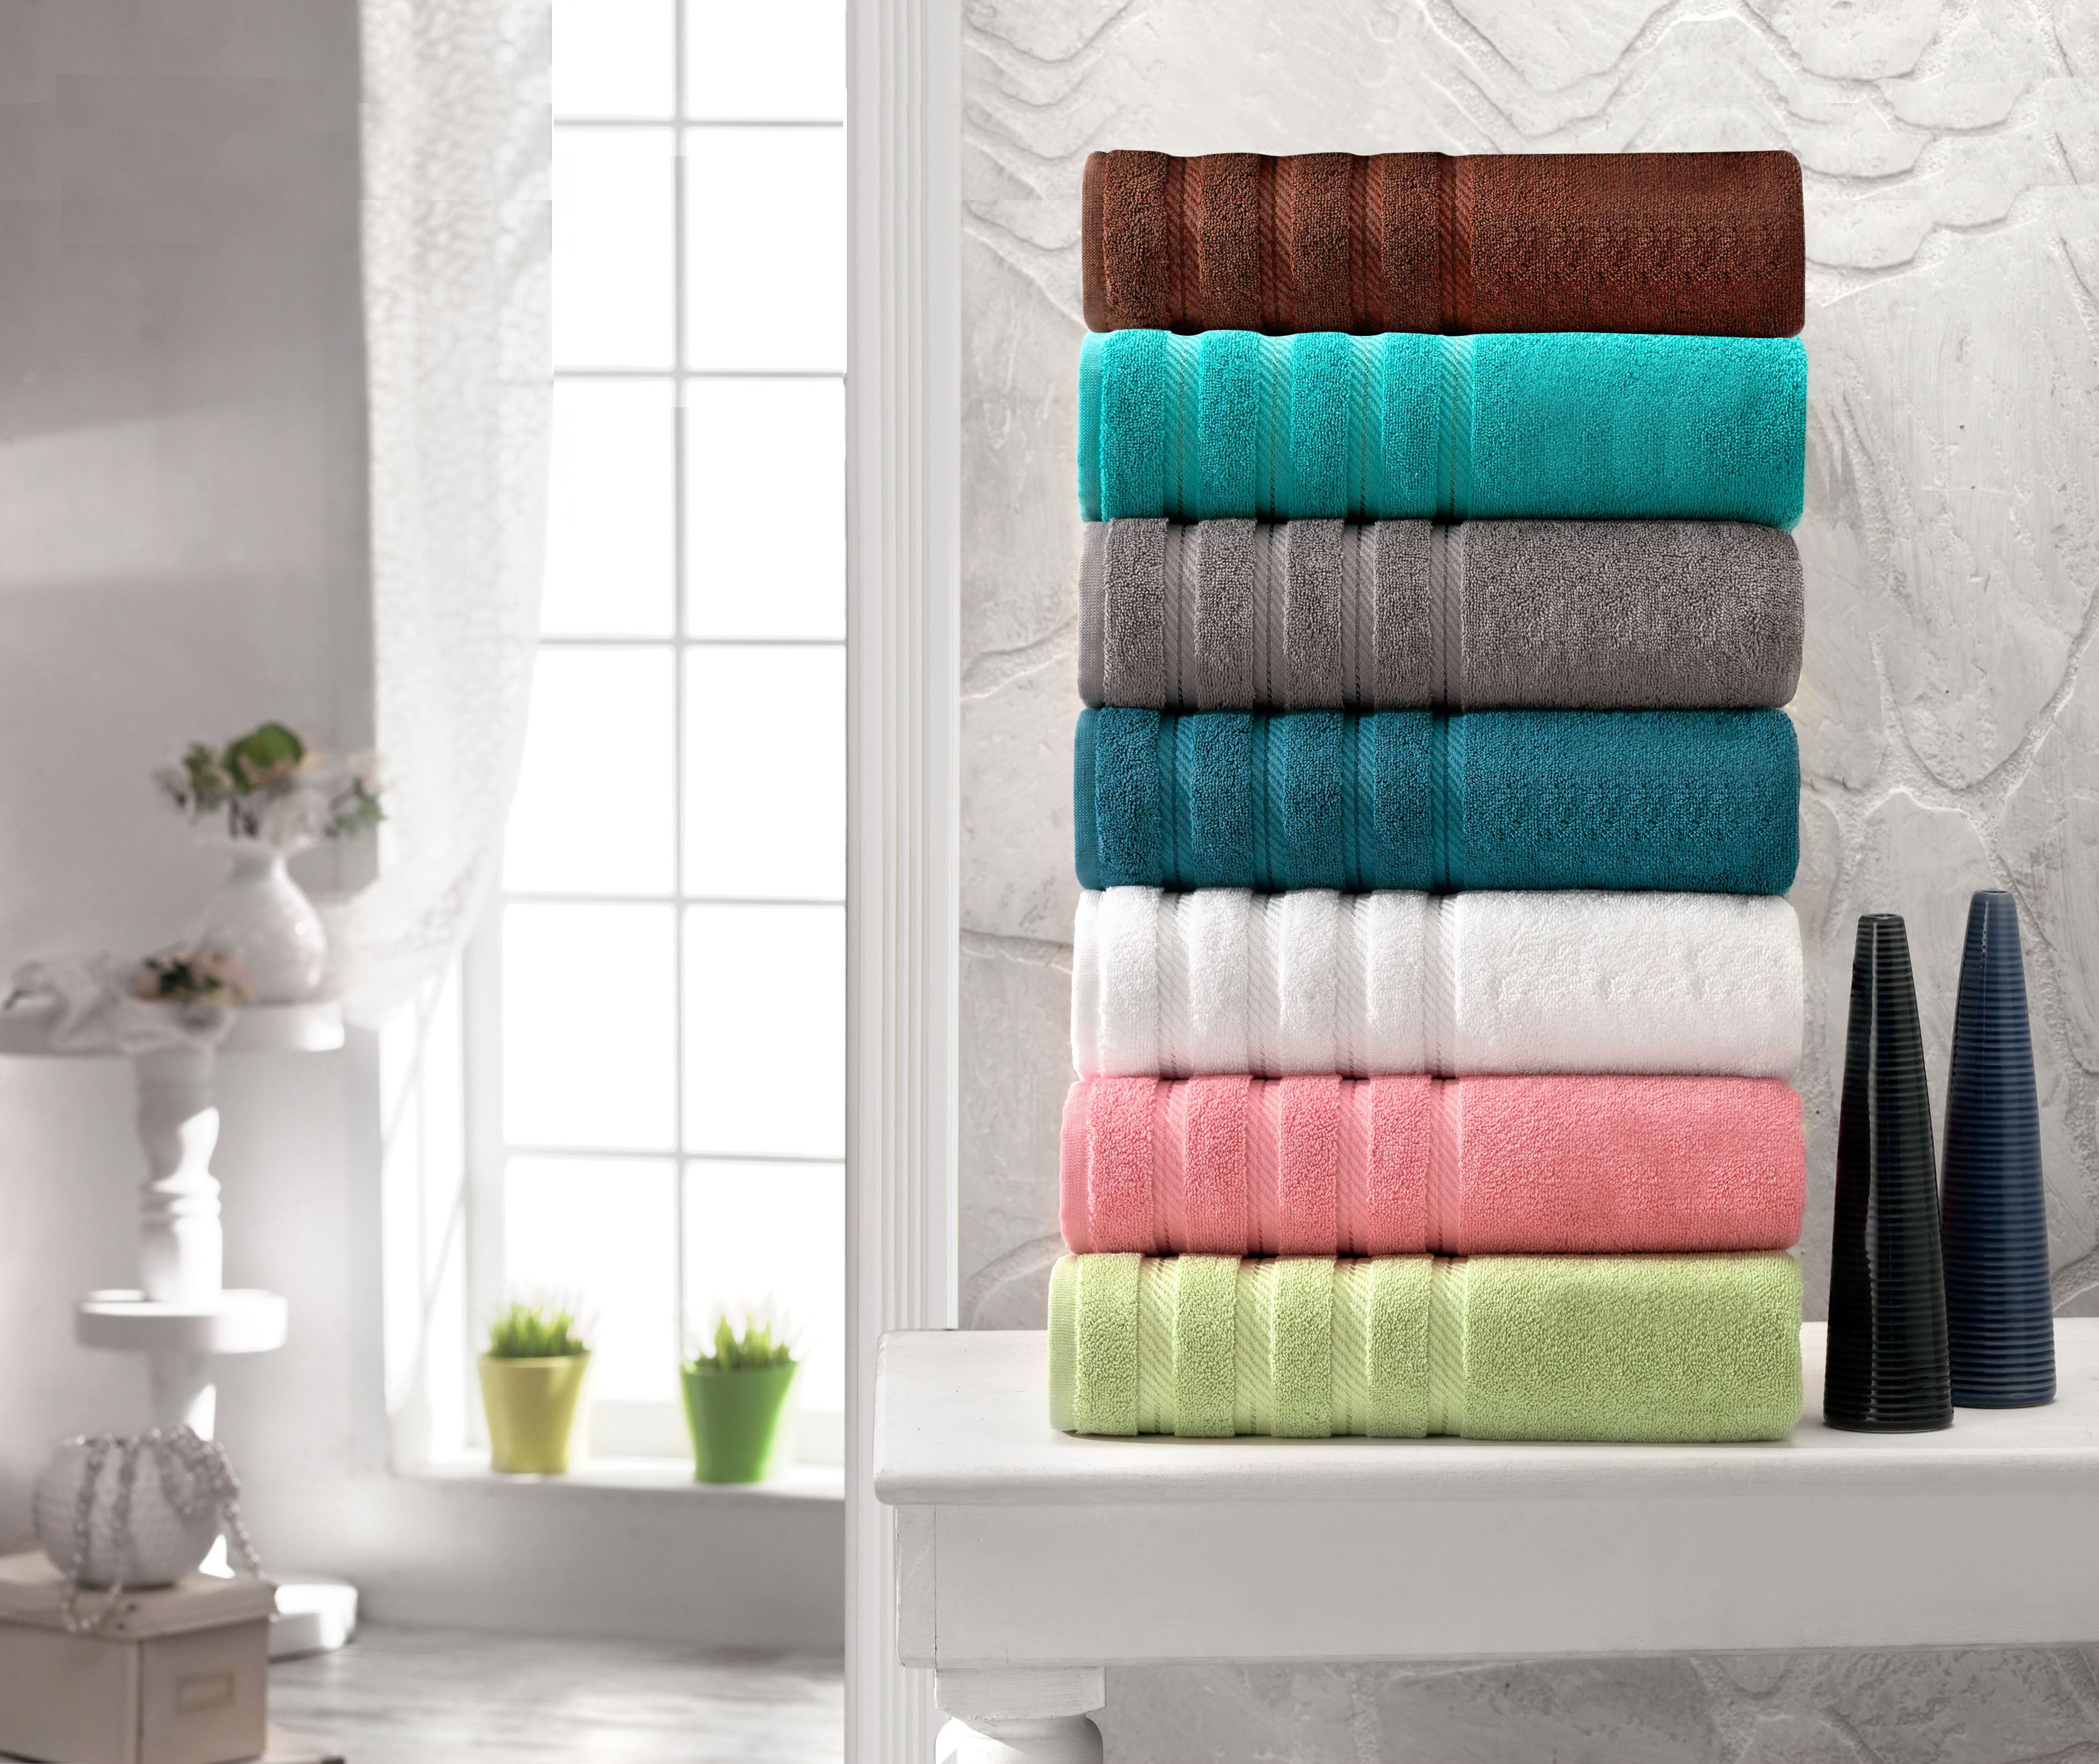 Дизайн полотенца. Полотенца для гостиниц. Полотенце Luxury. Luzz Towel полотенце. Дизайны полотенец 2022.